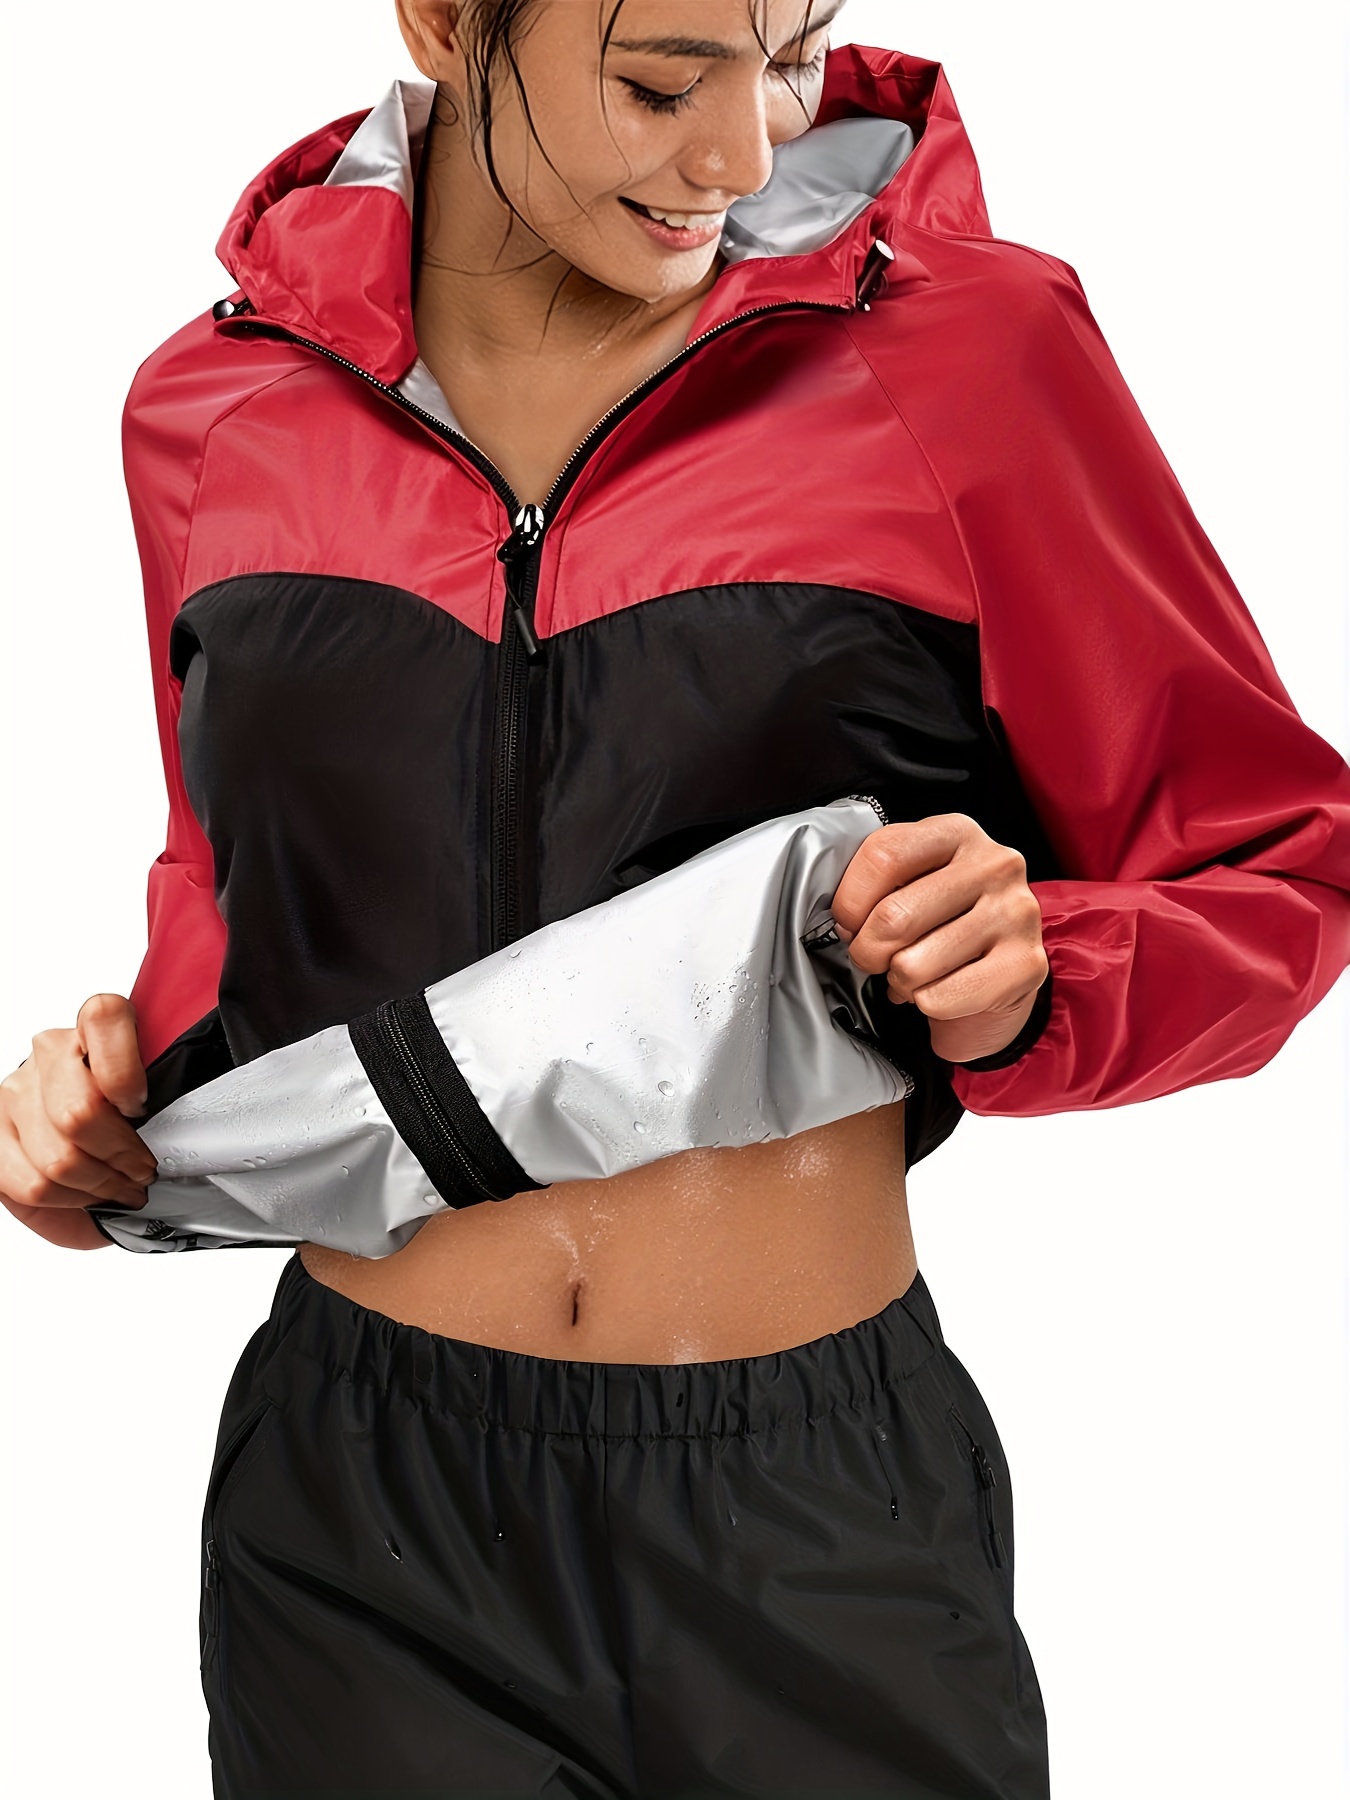 3 In 1 Zipper Full Body Shaper Sweat Sauna Suit For Women, Sweat Slimmer  Workout Top With Sleeve Shorts, Women's Activewear